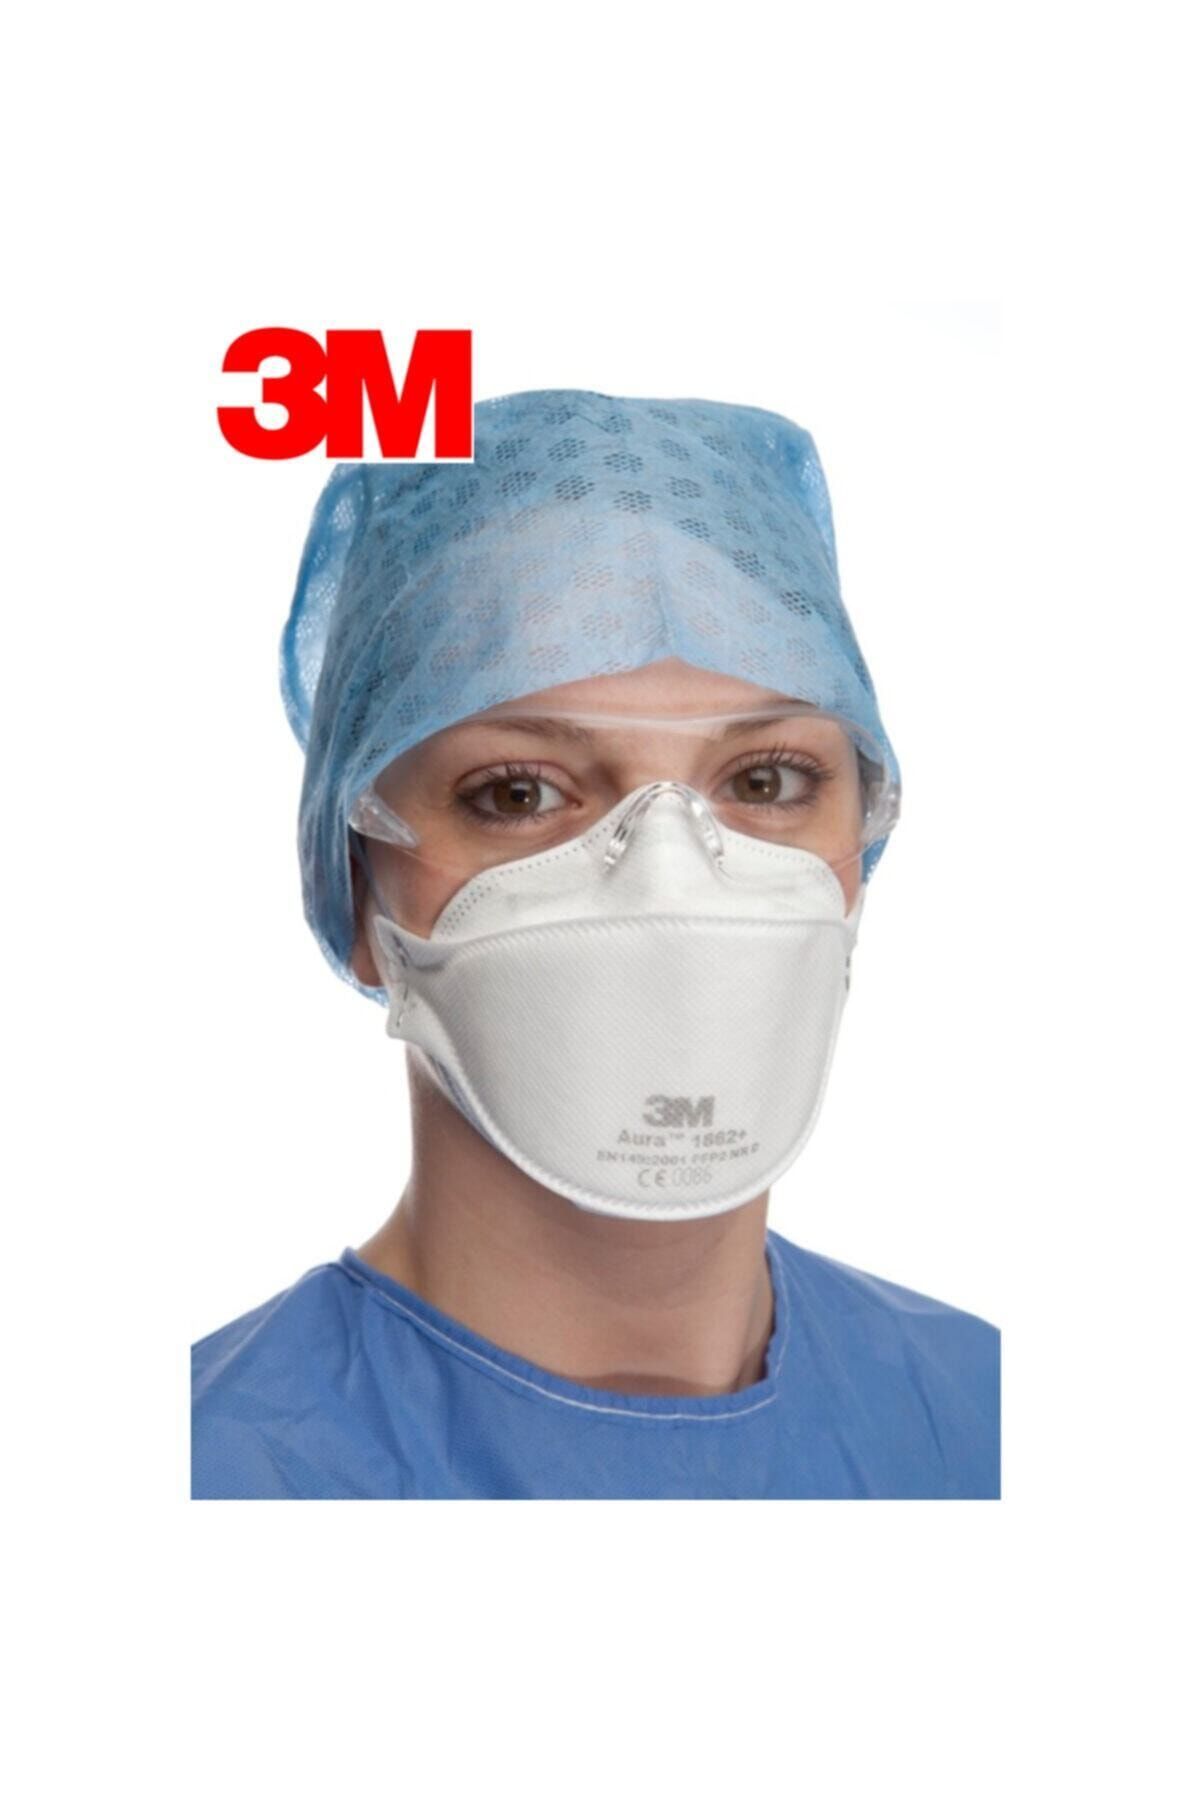 3M 1862 Aura Ffp2 Ventilsiz Medikal Maske (1 ADET)